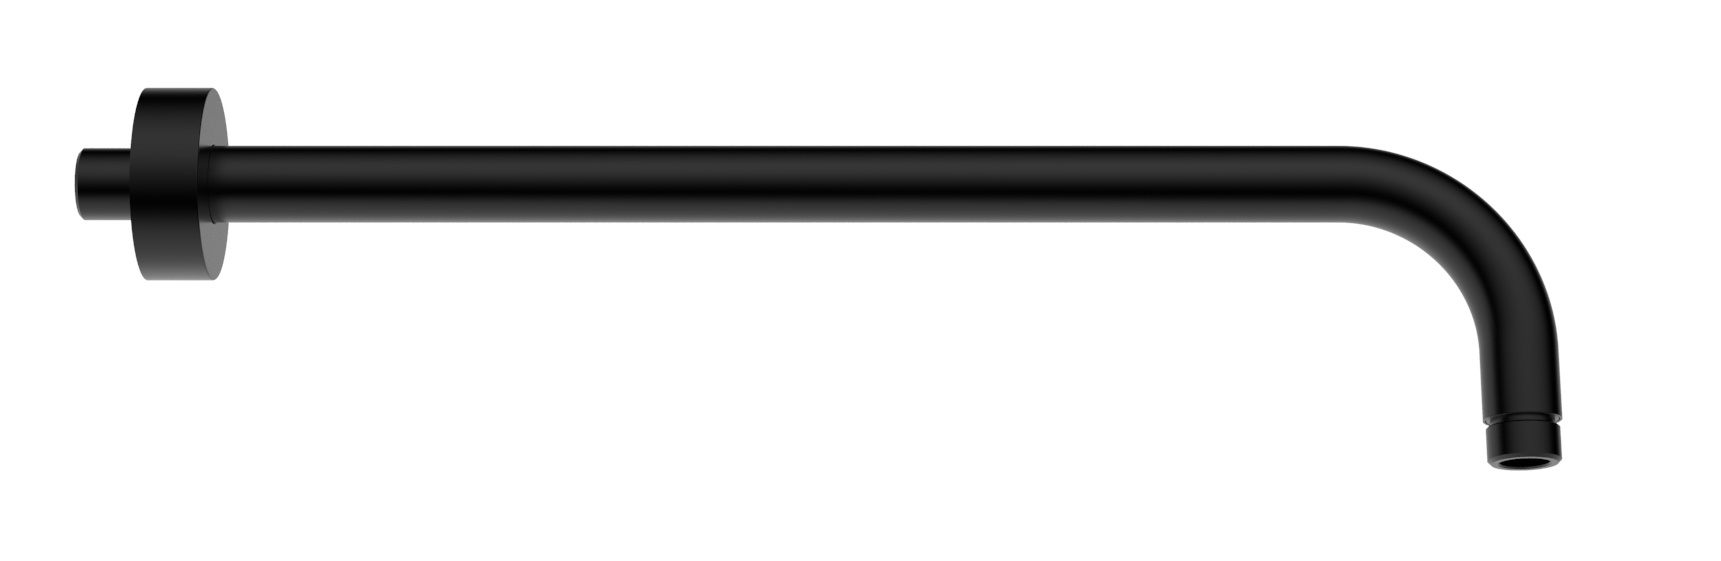 Brausearm AqvaDesign - rund - 1/2″ AG × 1/2″ AG × 400 mm - Rosette - mattschwarz